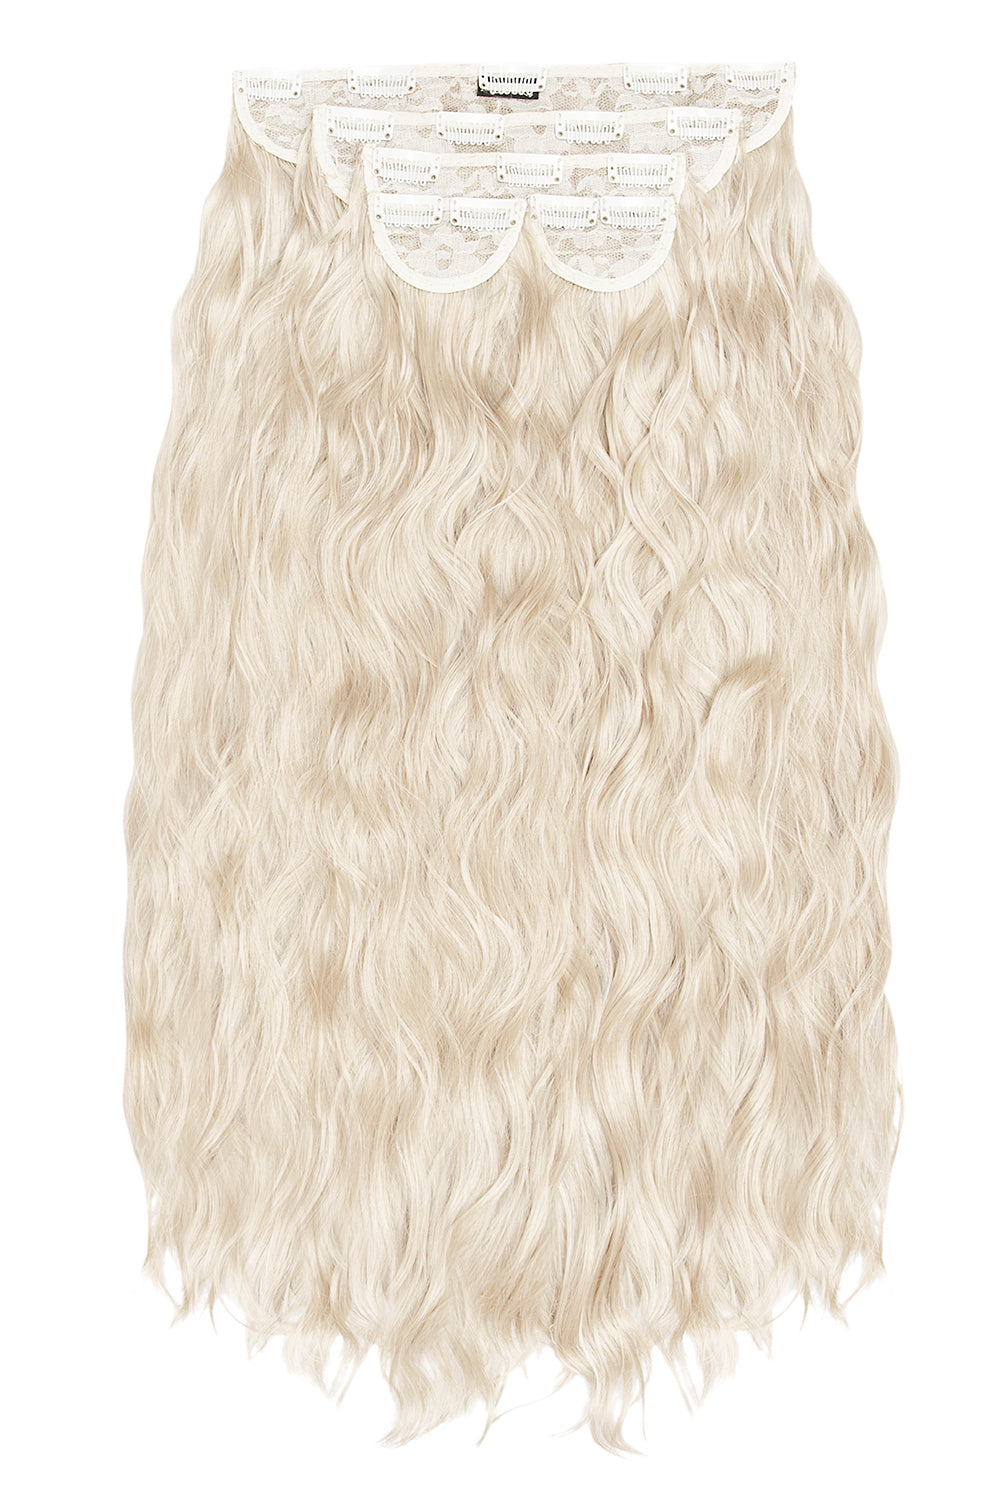 Super Thick 26" 5 Piece Waist Length Wave Clip In Hair Extensions - LullaBellz  - Bleach Blonde Festival Hair Inspiration